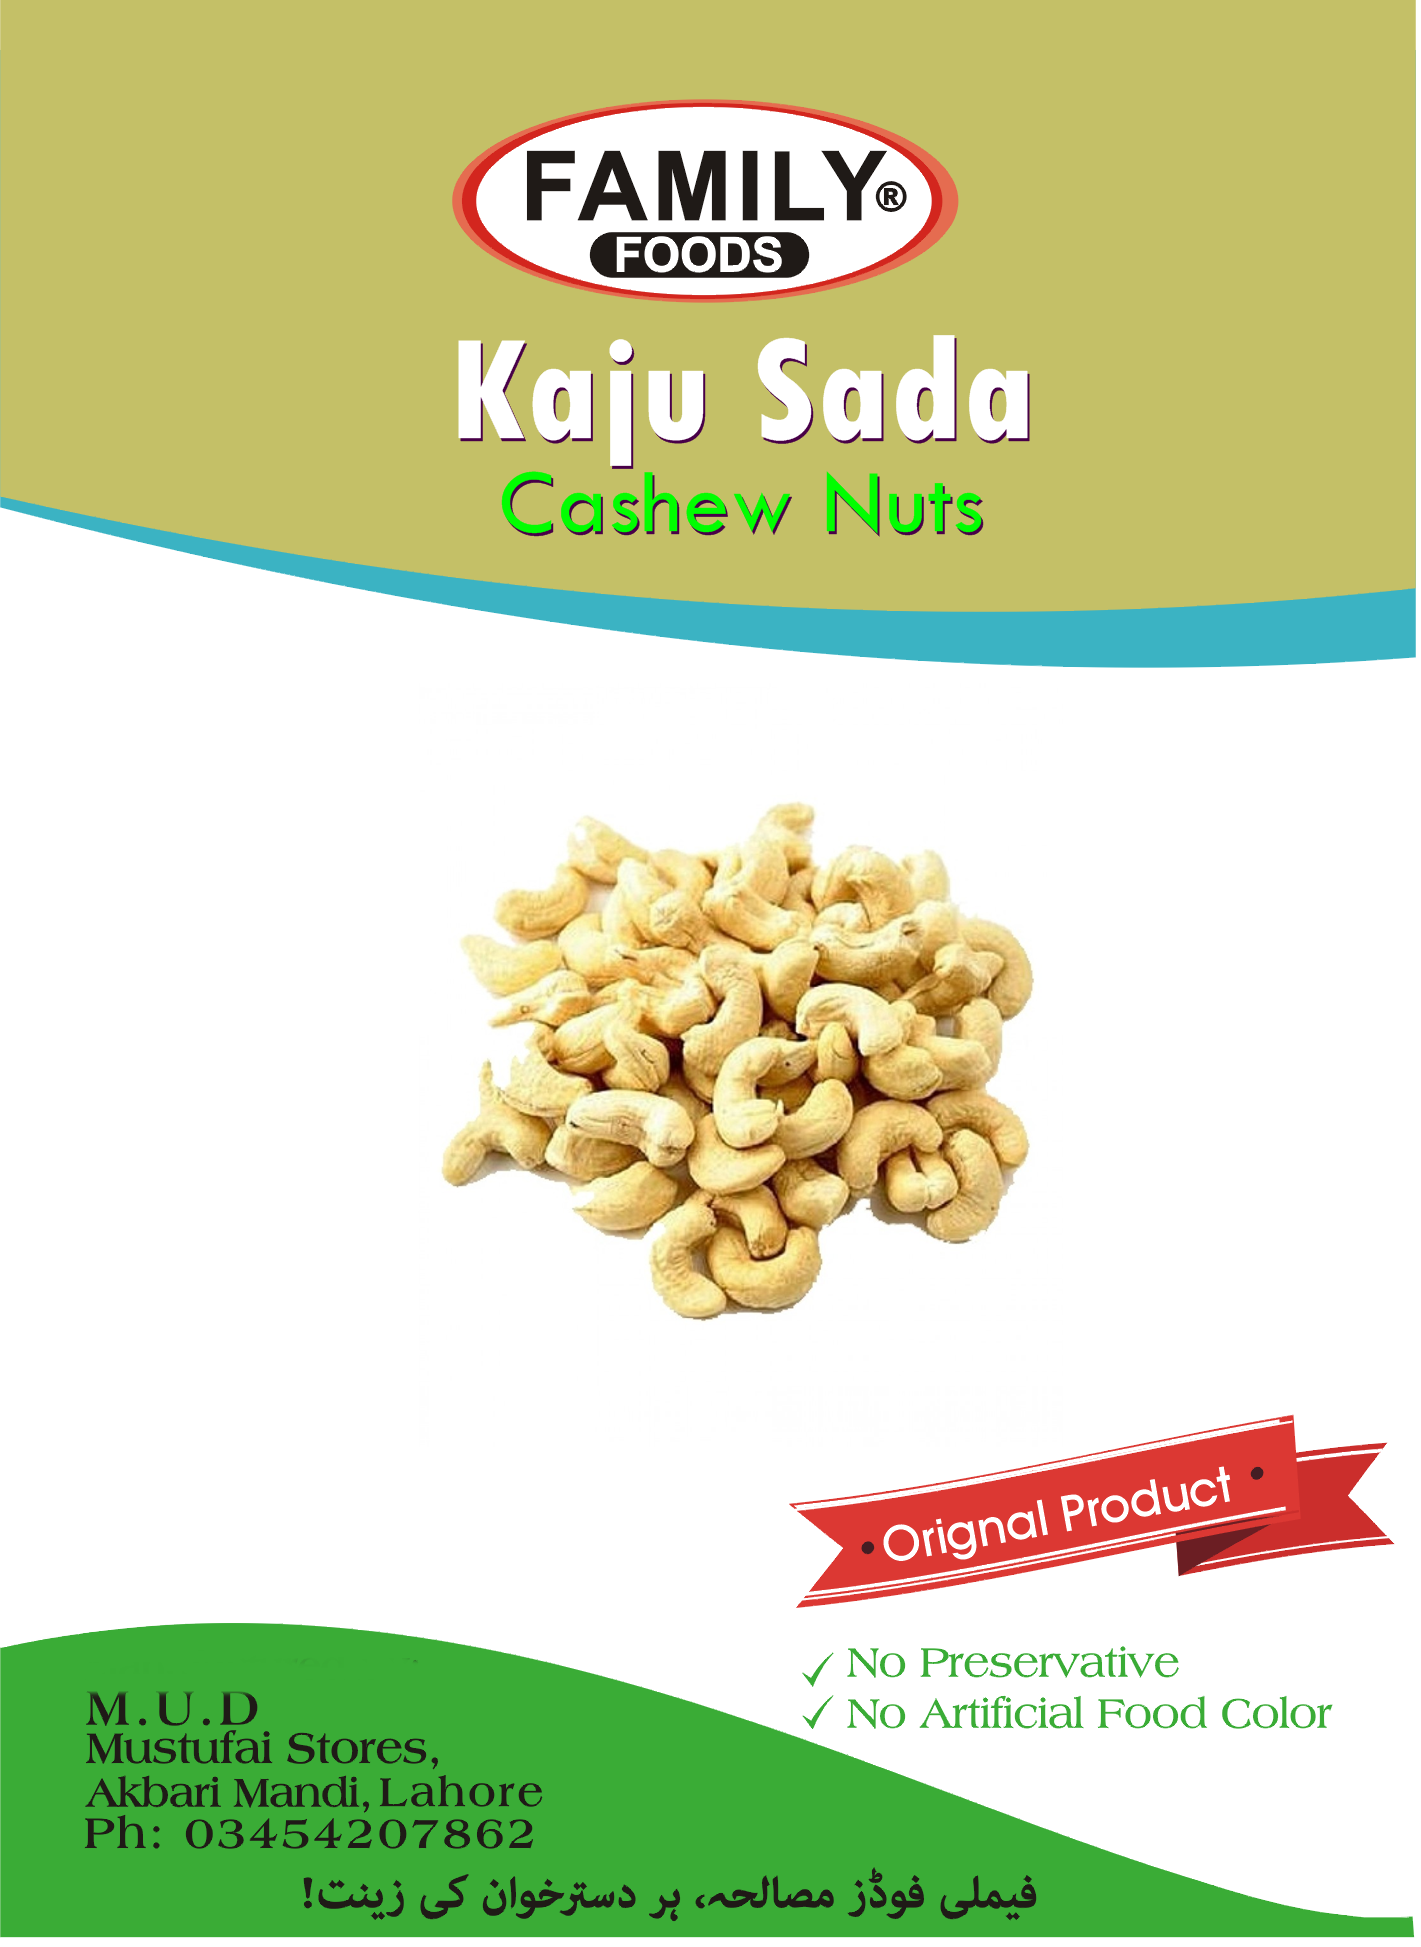 Cashew Nuts (Kaju Sada).